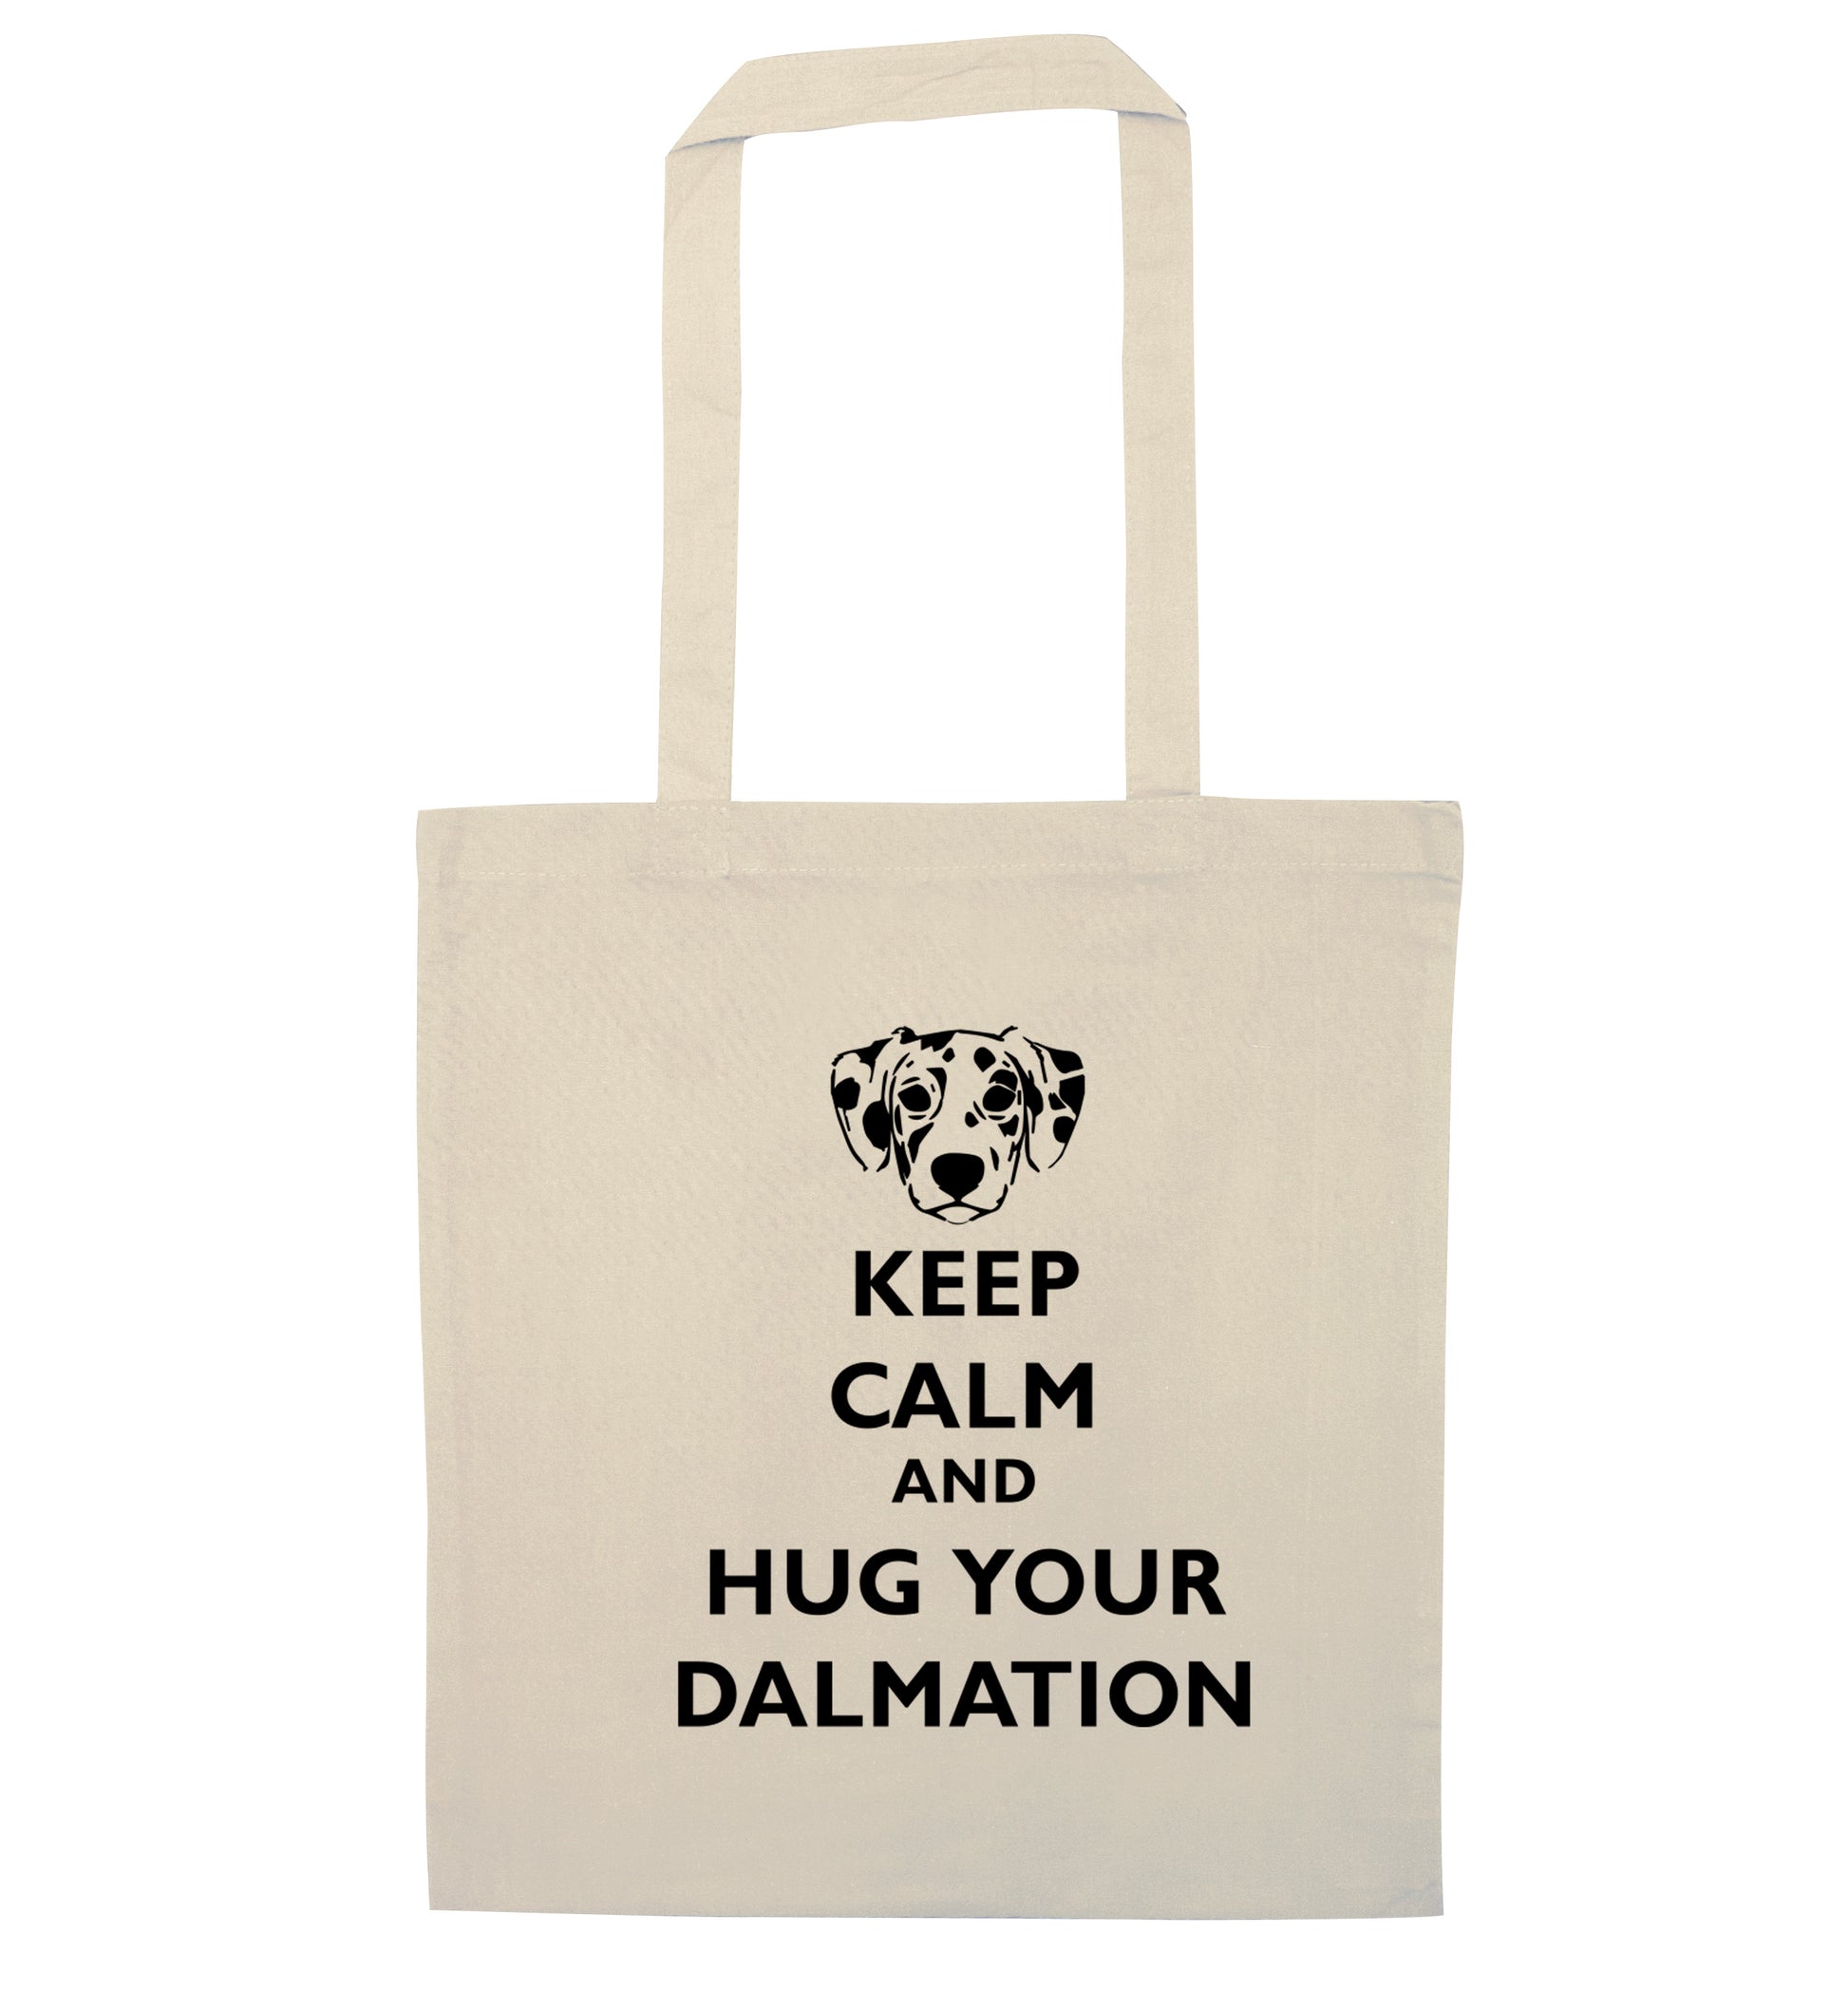 Keep calm and hug your dalmation natural tote bag